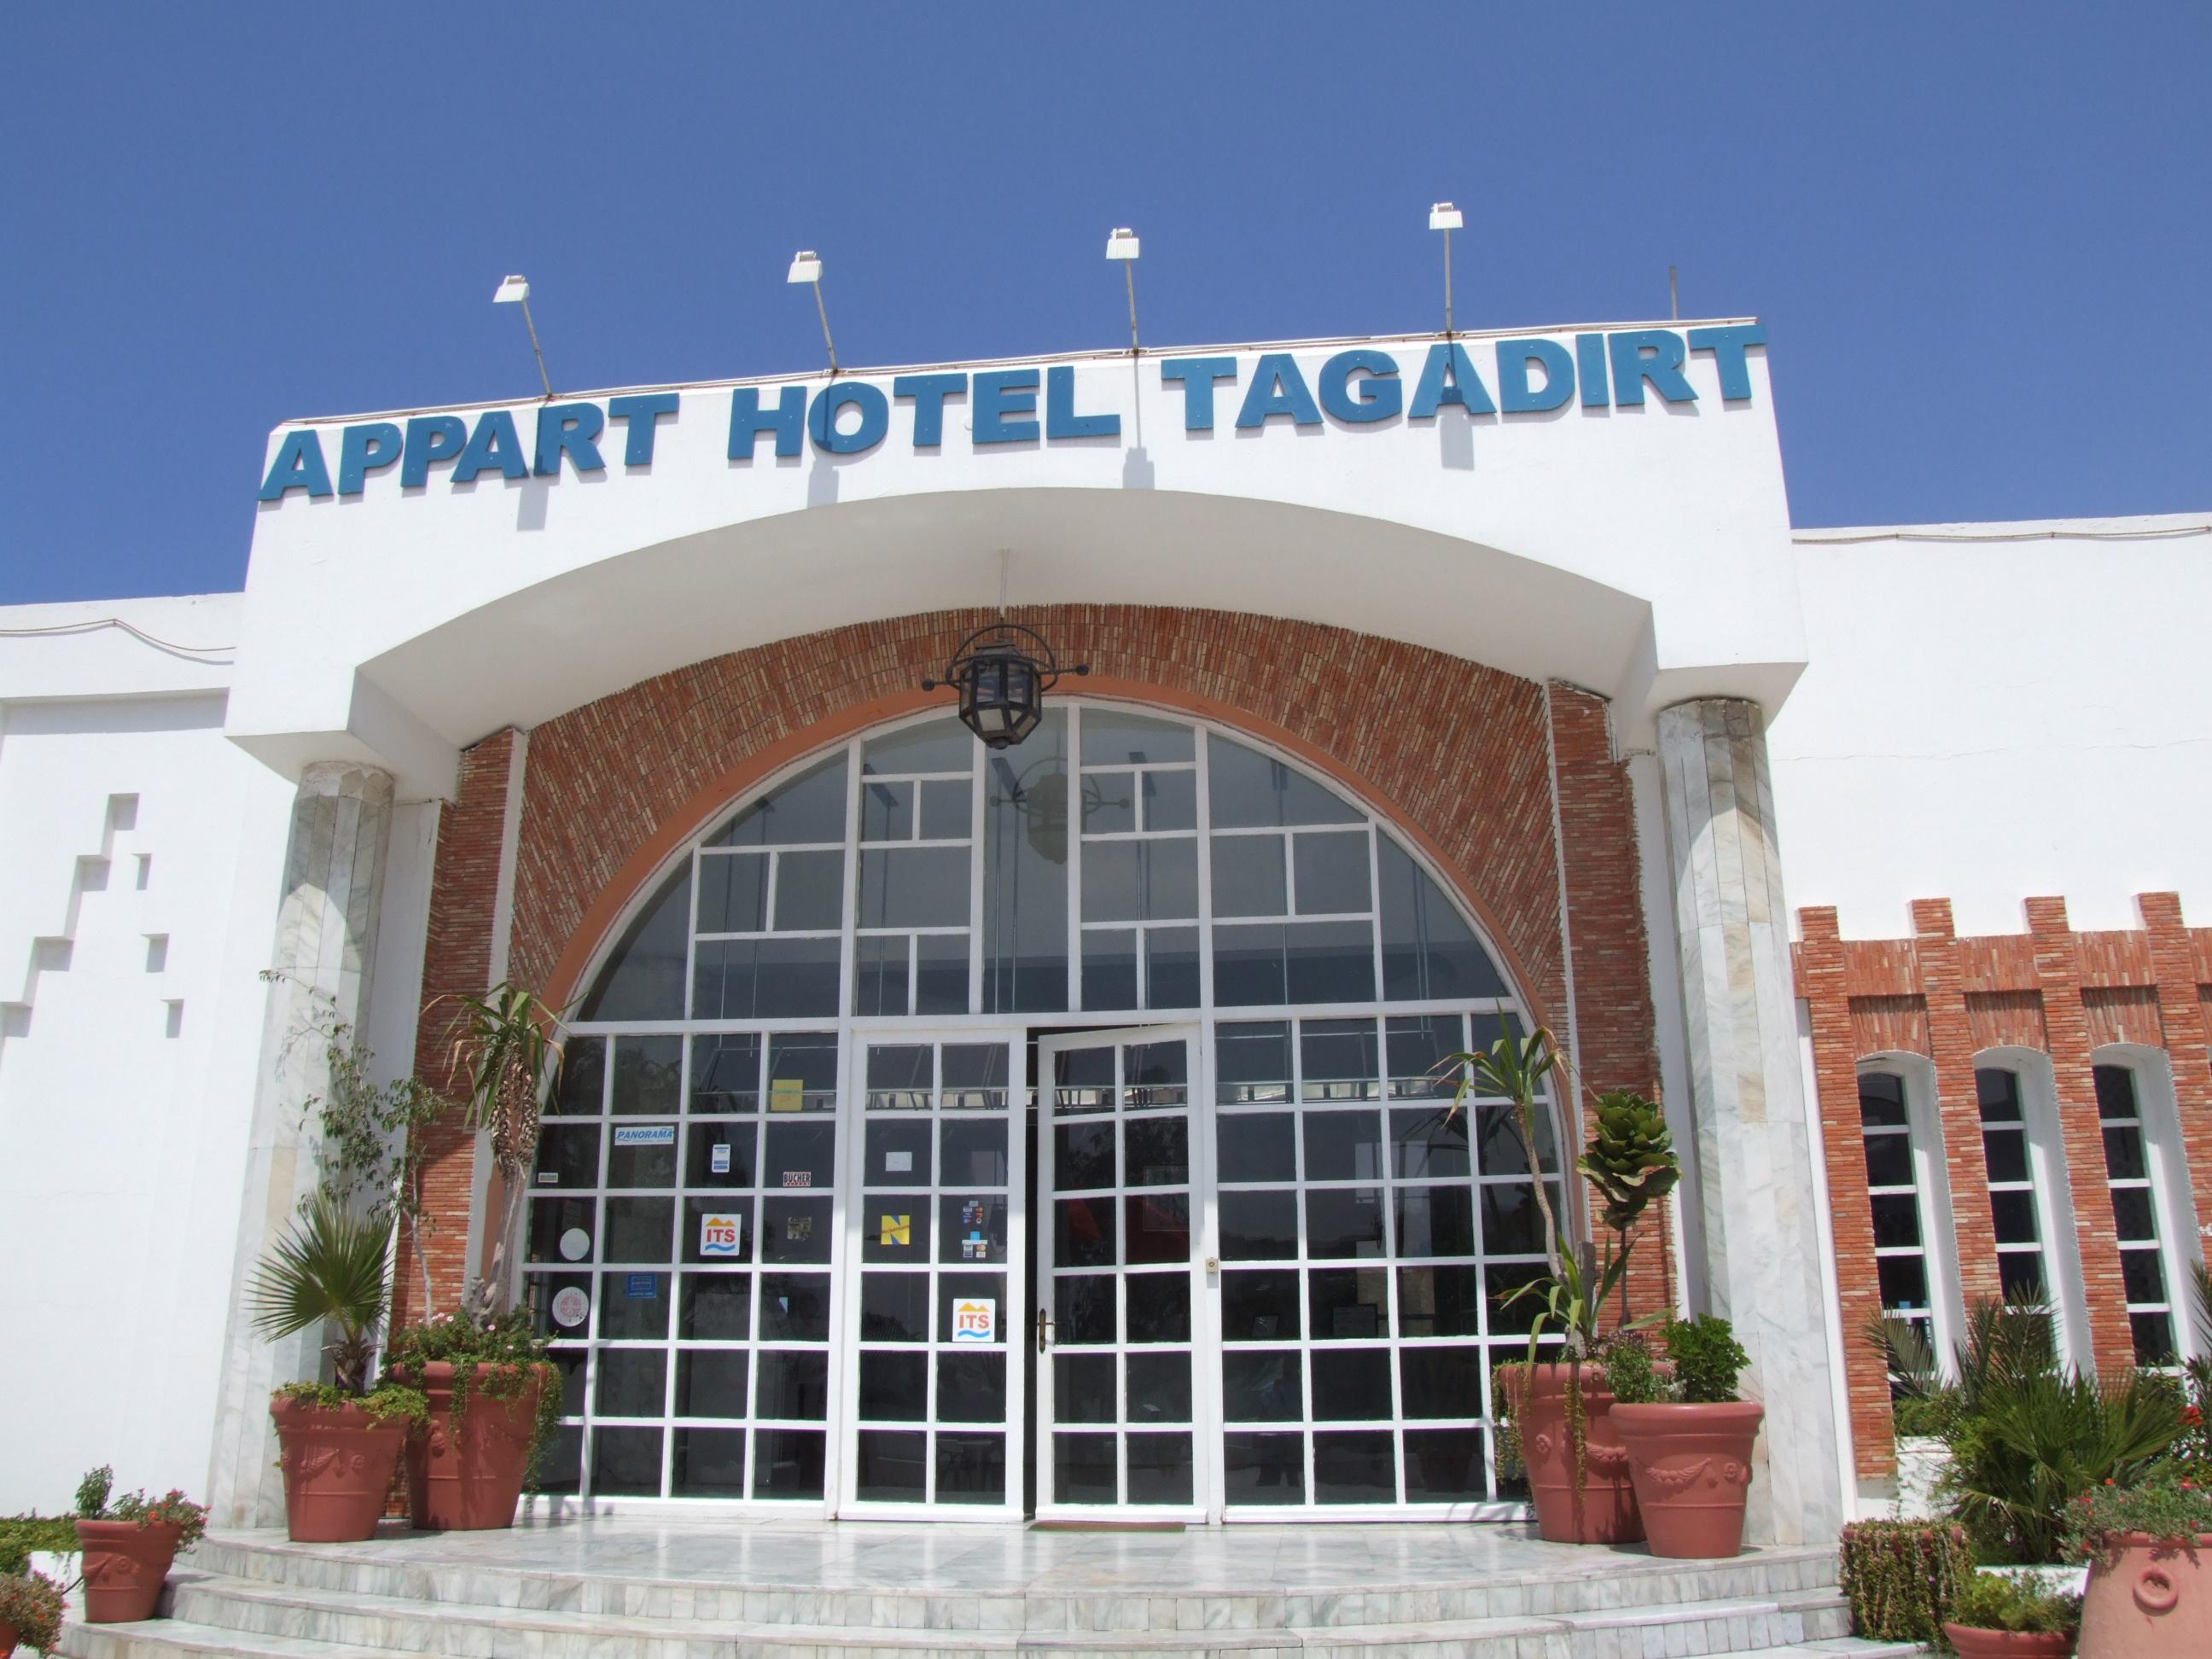  Appart Hotel Tagadirt